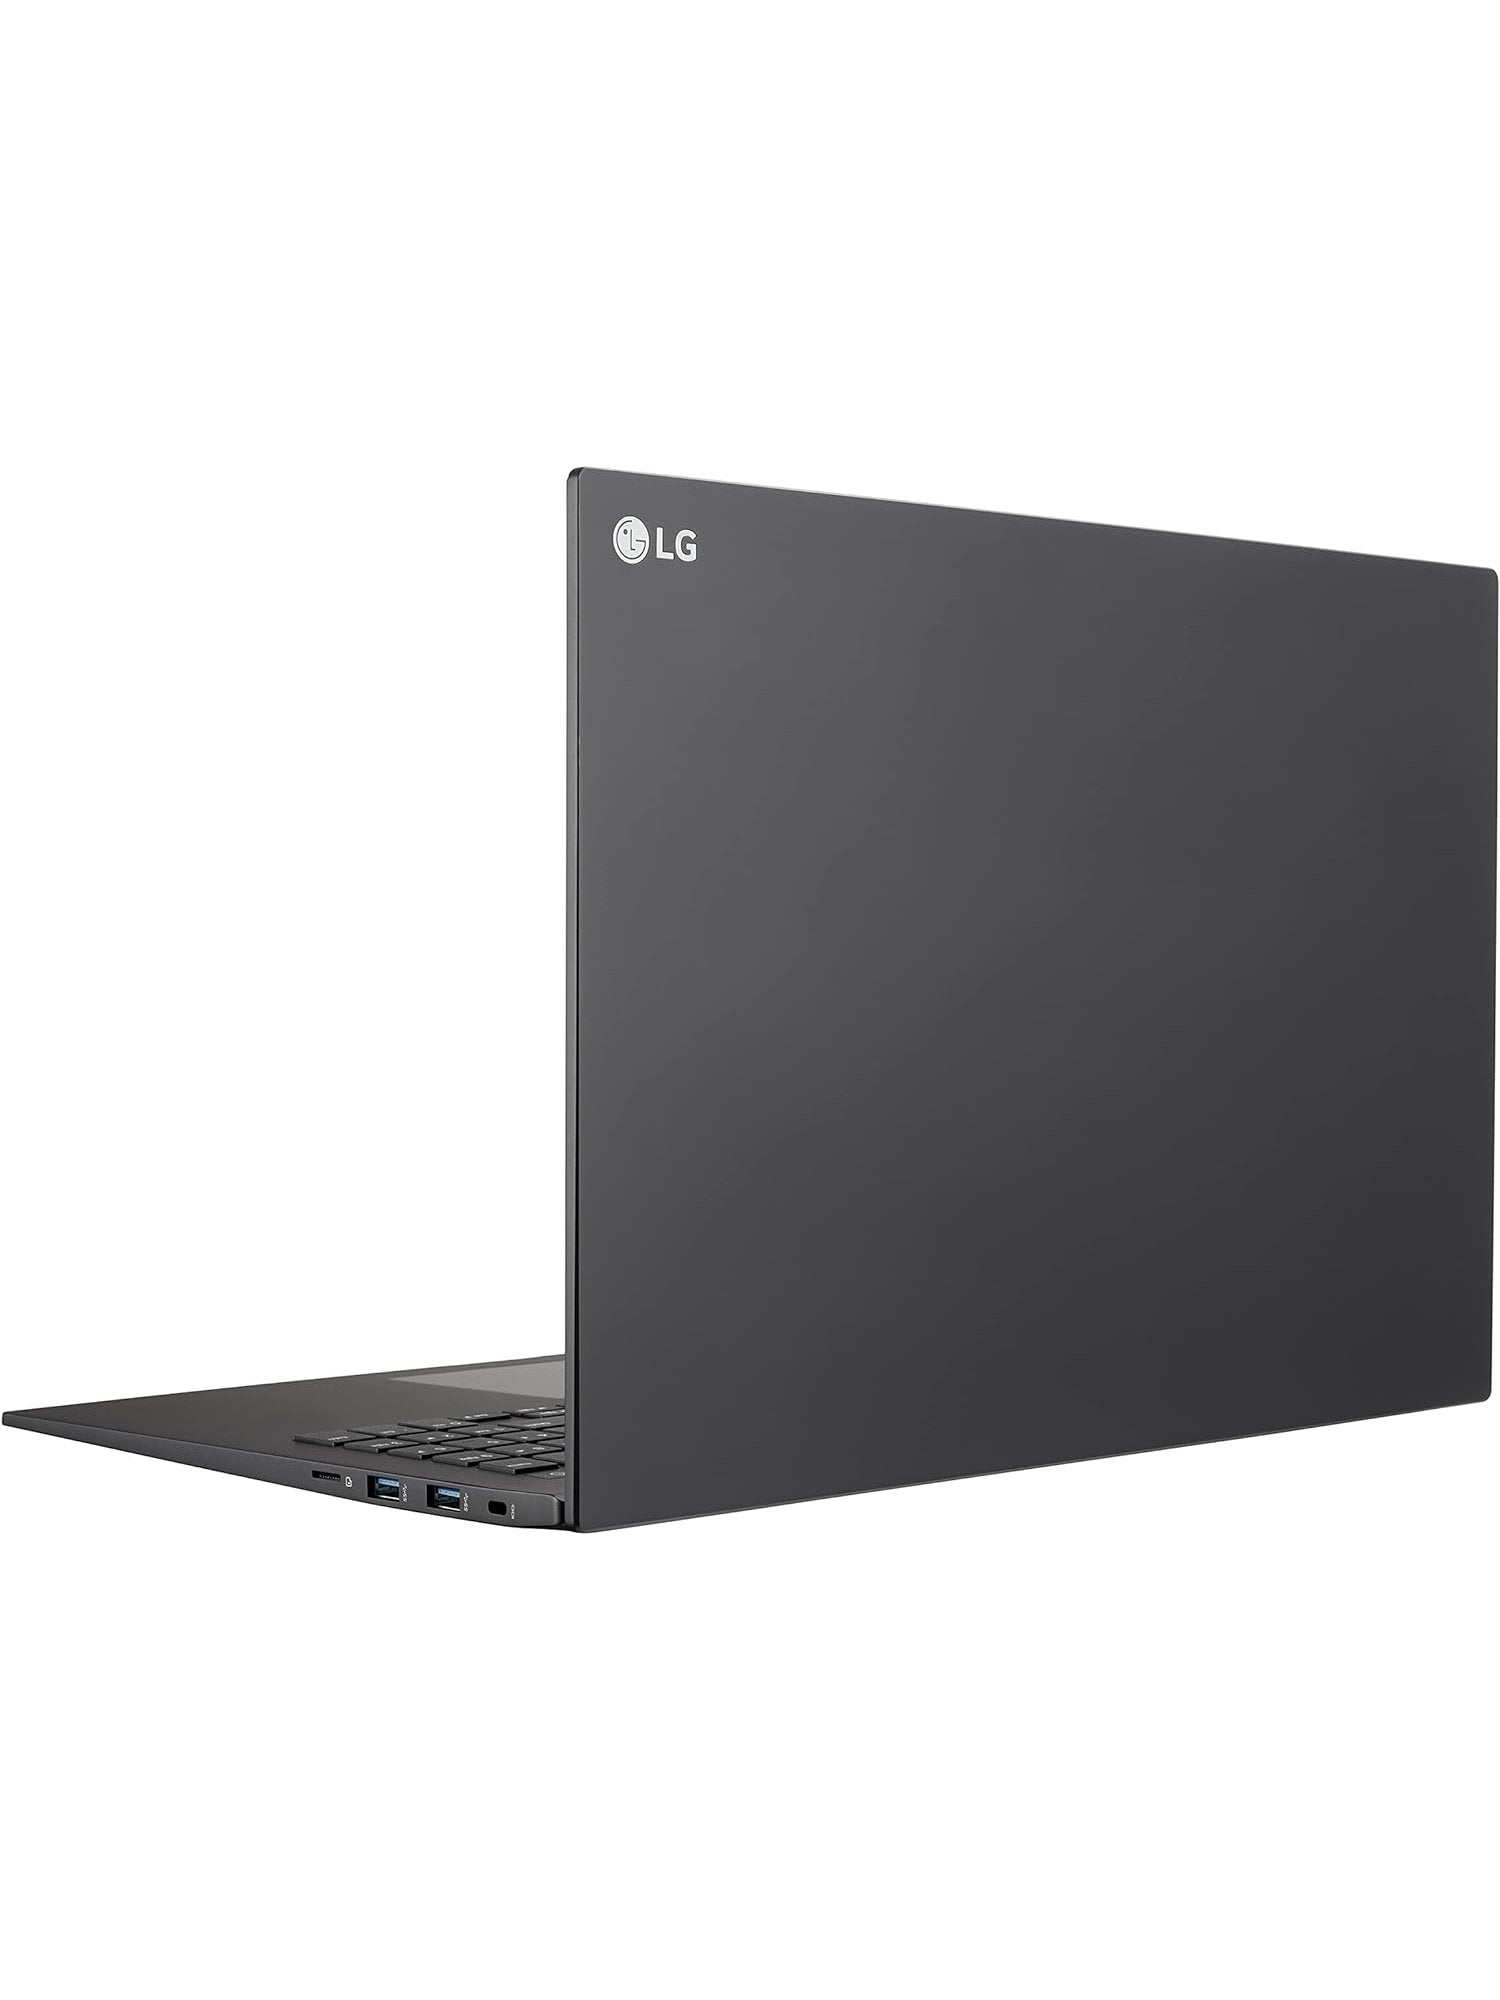 LG UltraPC 16U7R Laptop, 16” IPS Display, AMD Ryzen 7 7730U Processor, 16GB RAM, 512GB PCIe SSD, Webcam, , HDMI, Type-C, Wi-Fi 6, Windows 11 Home, Gray